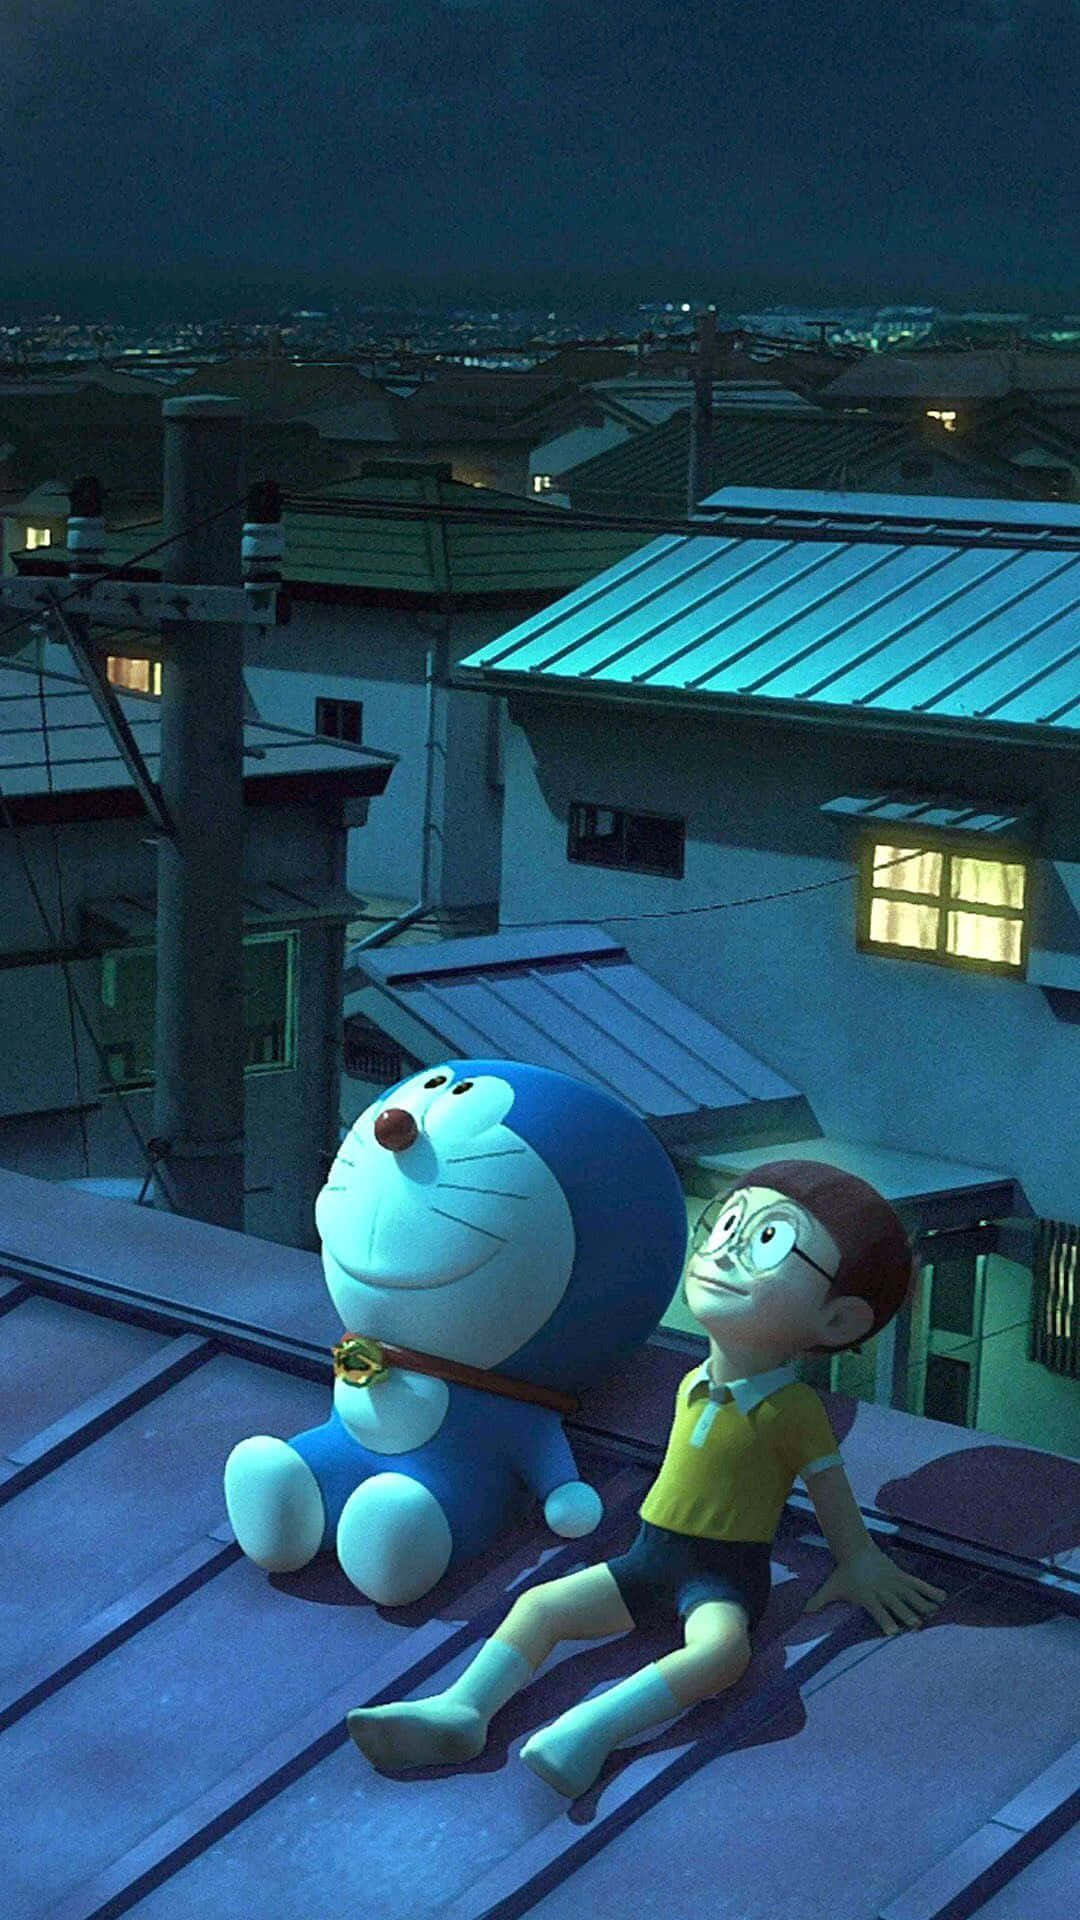 Doraemon In The Sky - Skyward Adventure Of The Helpful Robot Cat